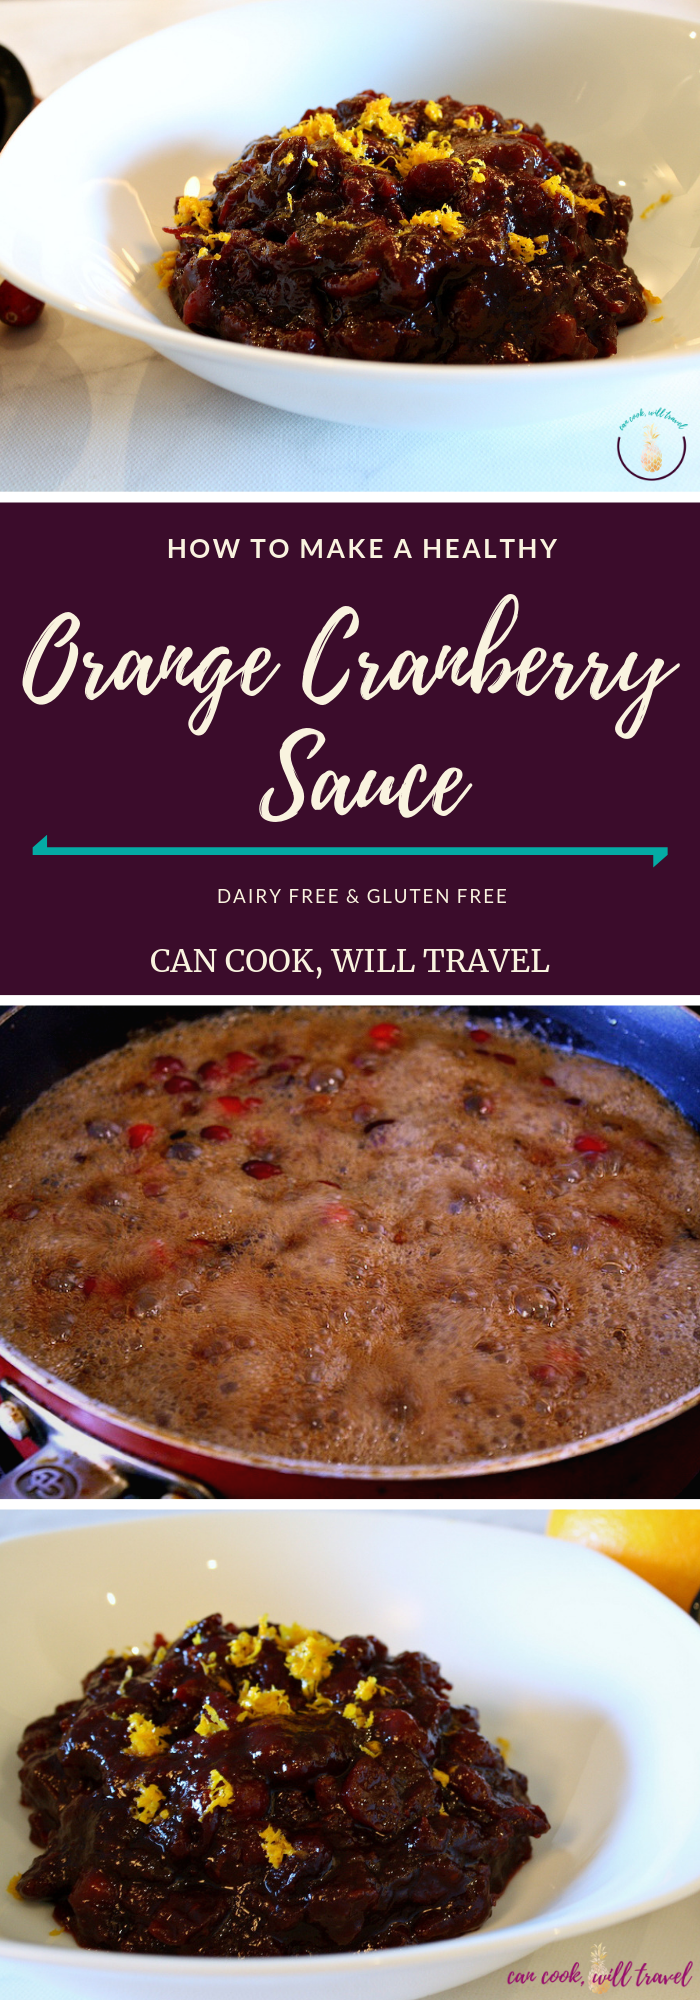 Orange Cranberry Sauce_Collage2